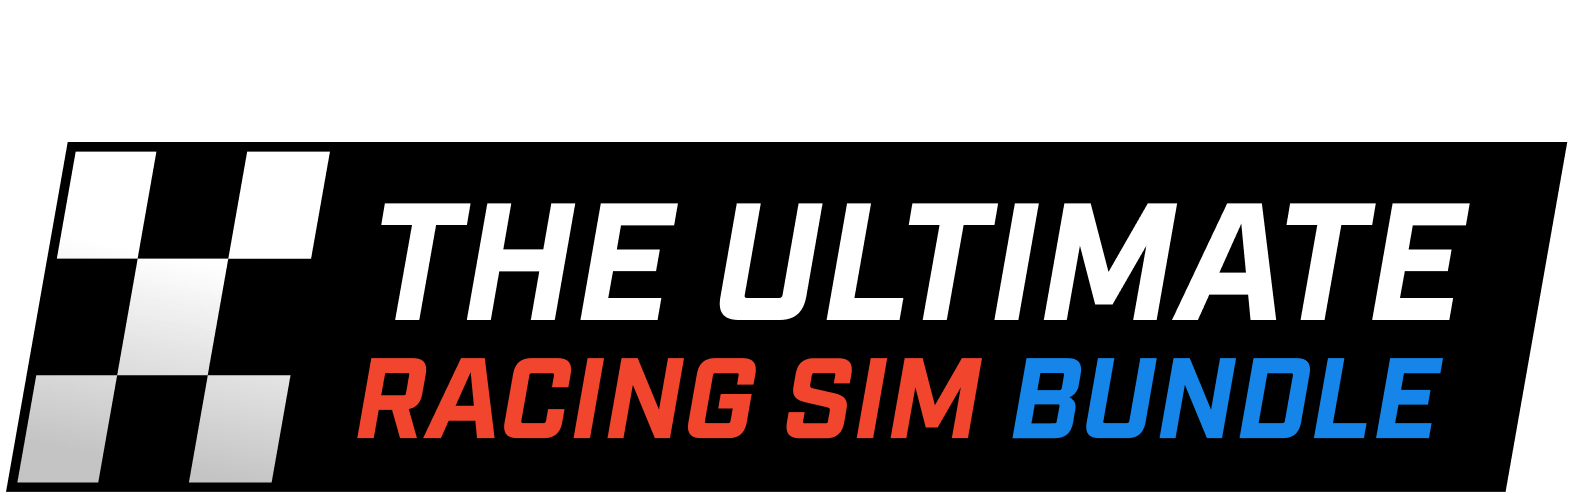 The Ultimate Racing Sim Bundle - HOLIDAY ENCORE